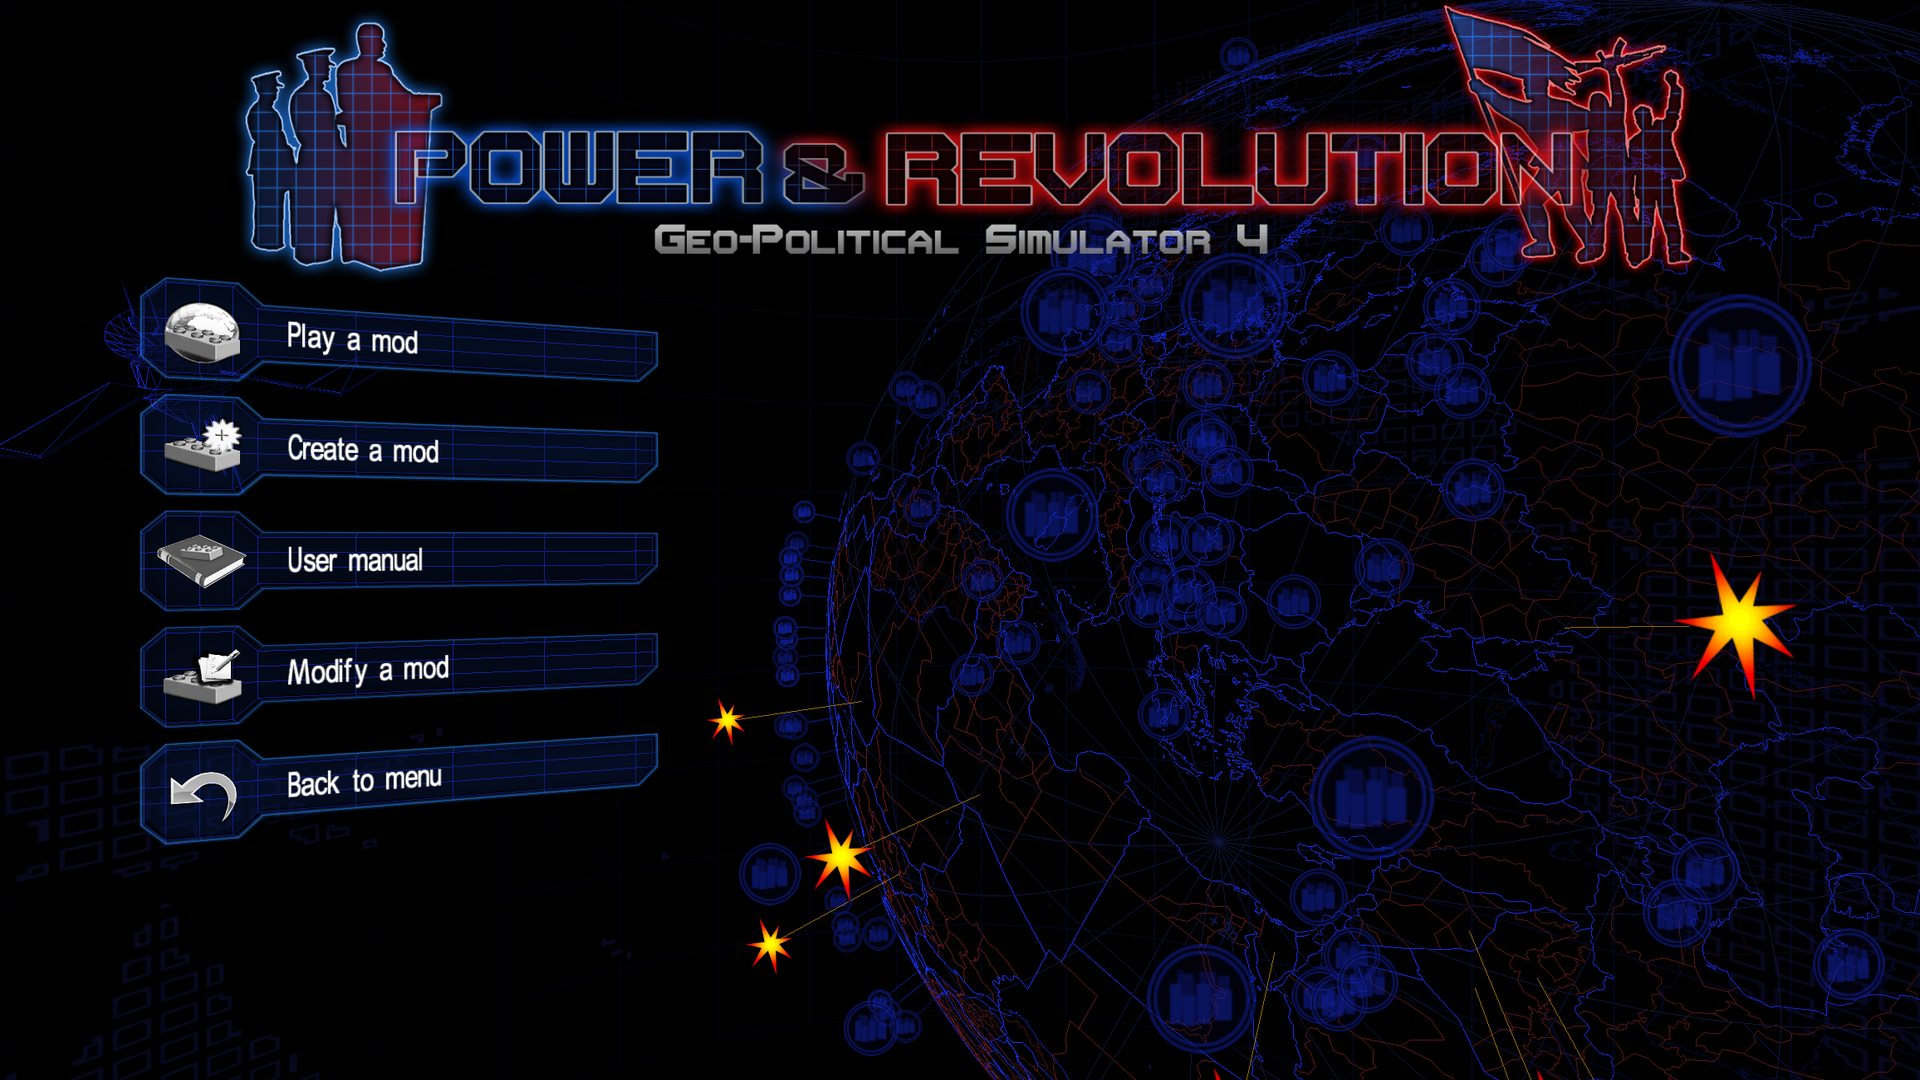 Power revolution geopolitical simulator